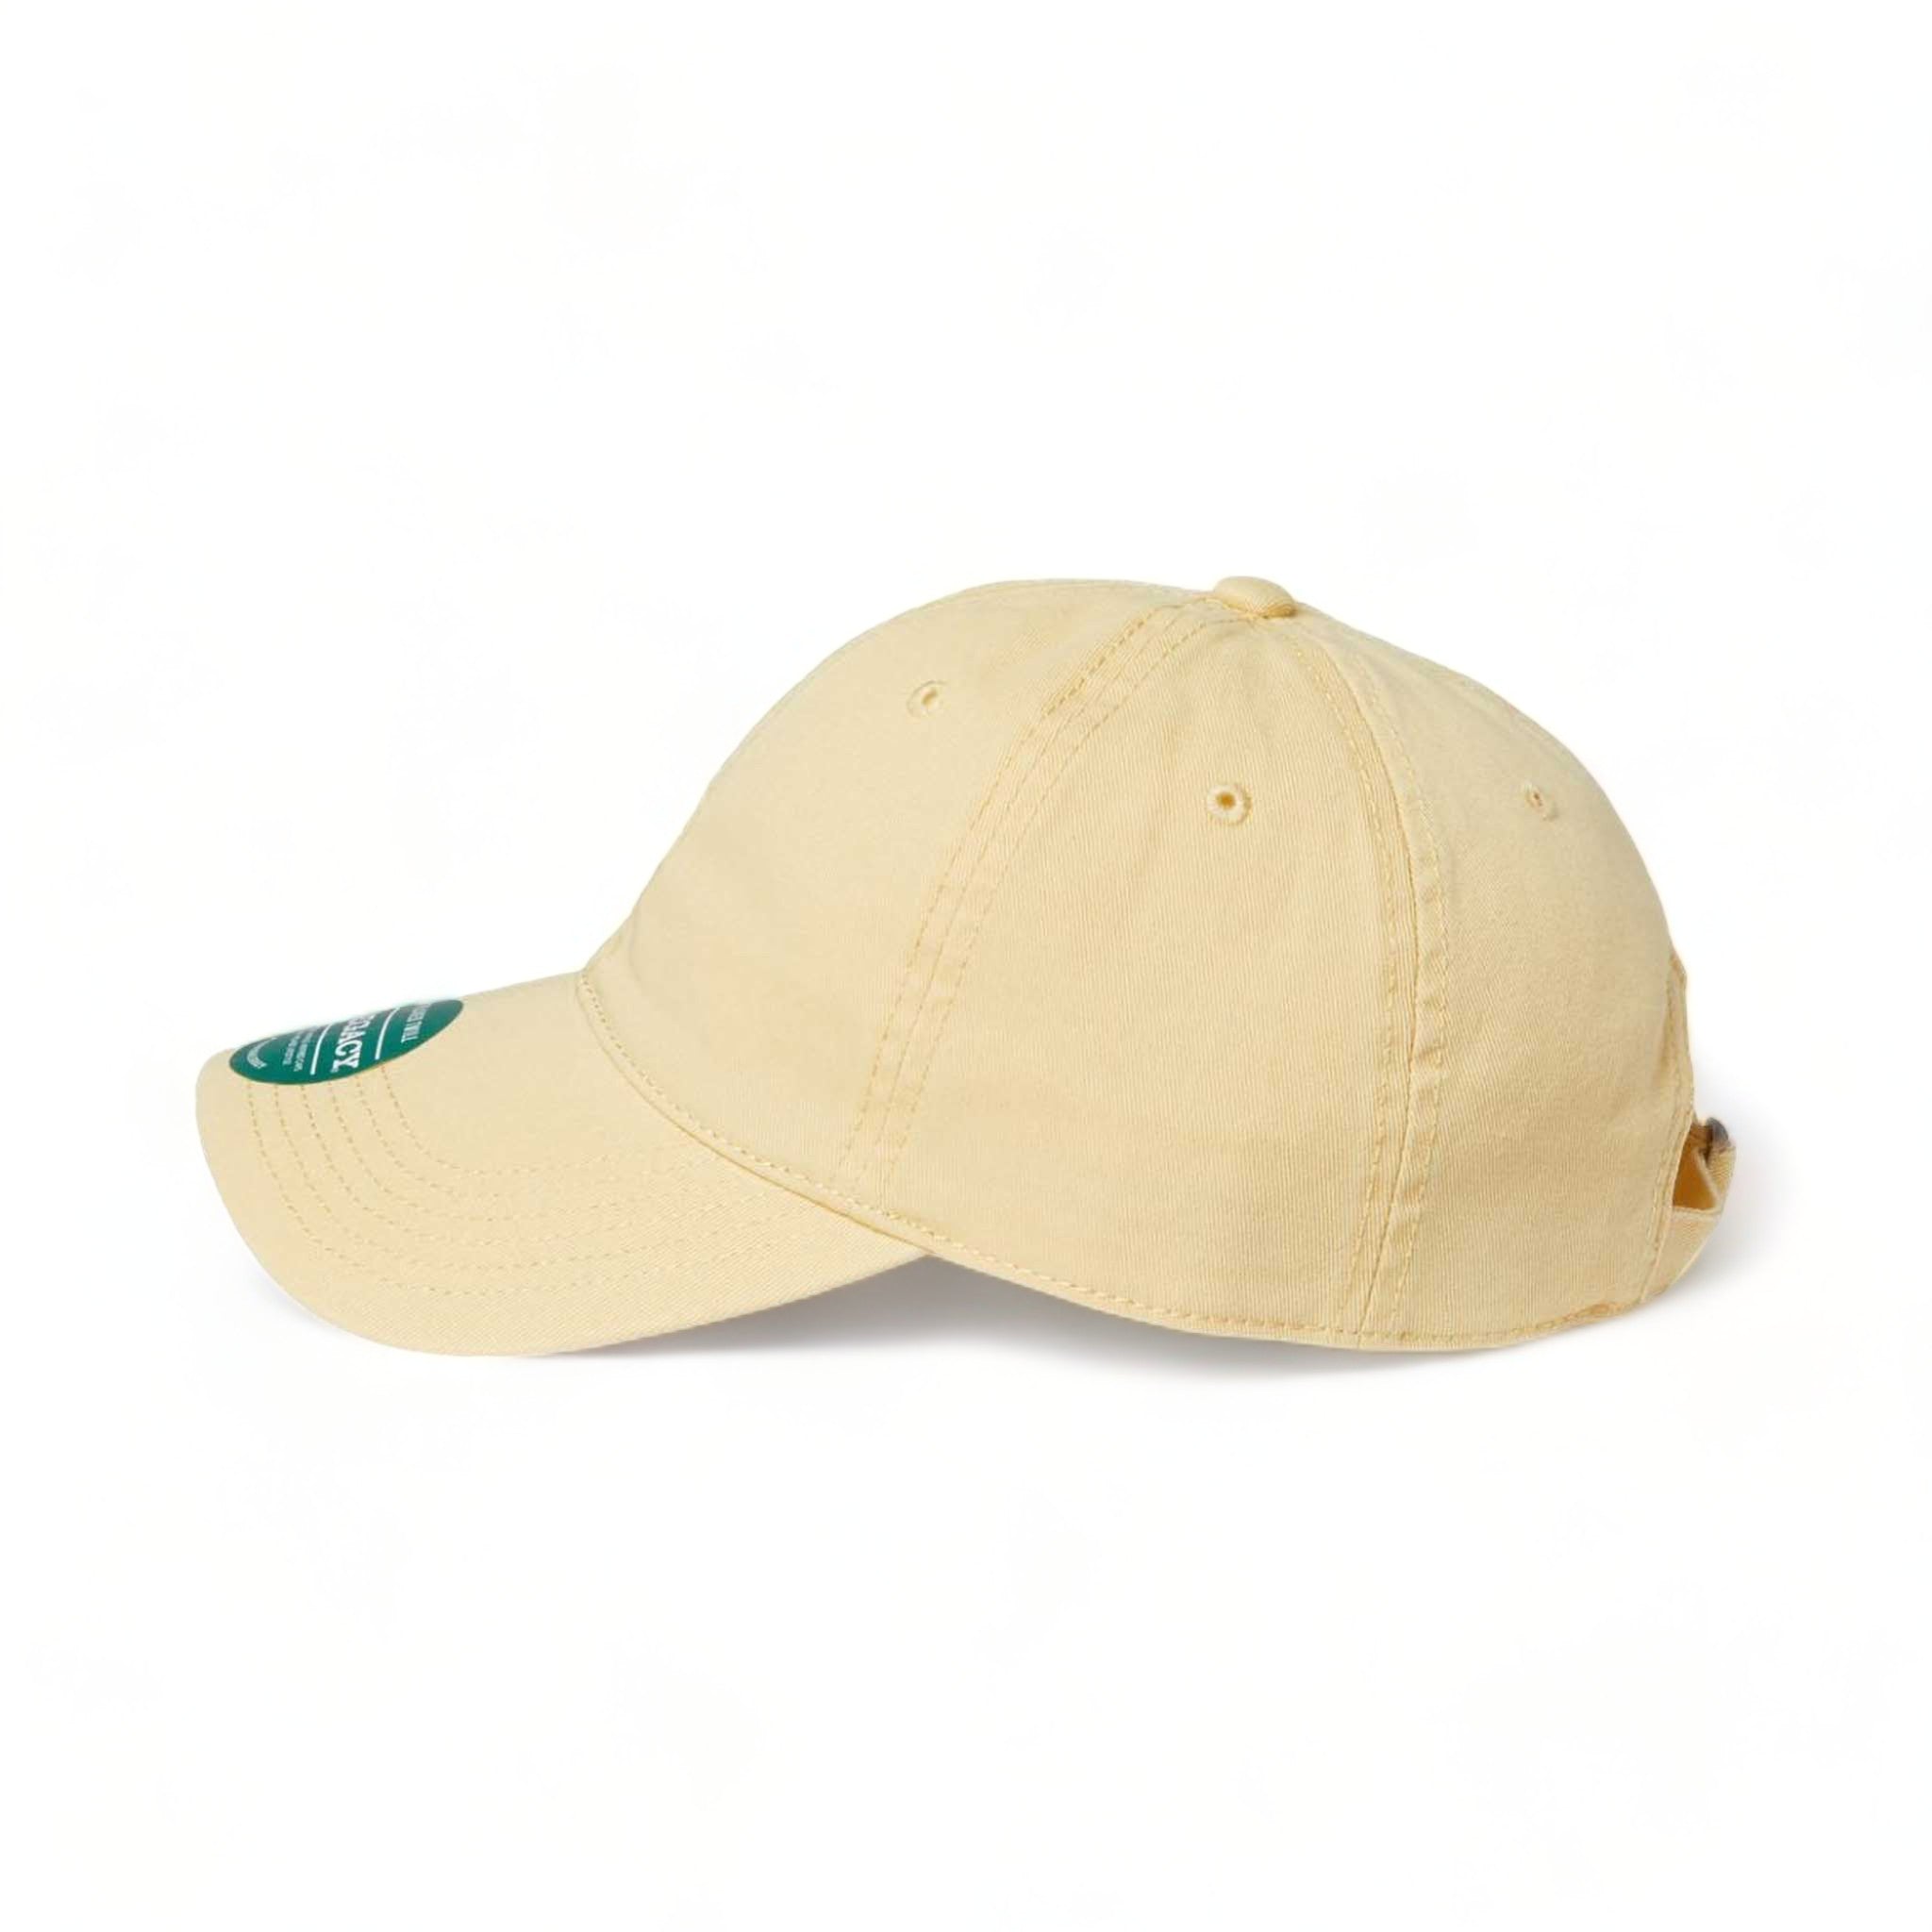 Side view of LEGACY EZA custom hat in lemon